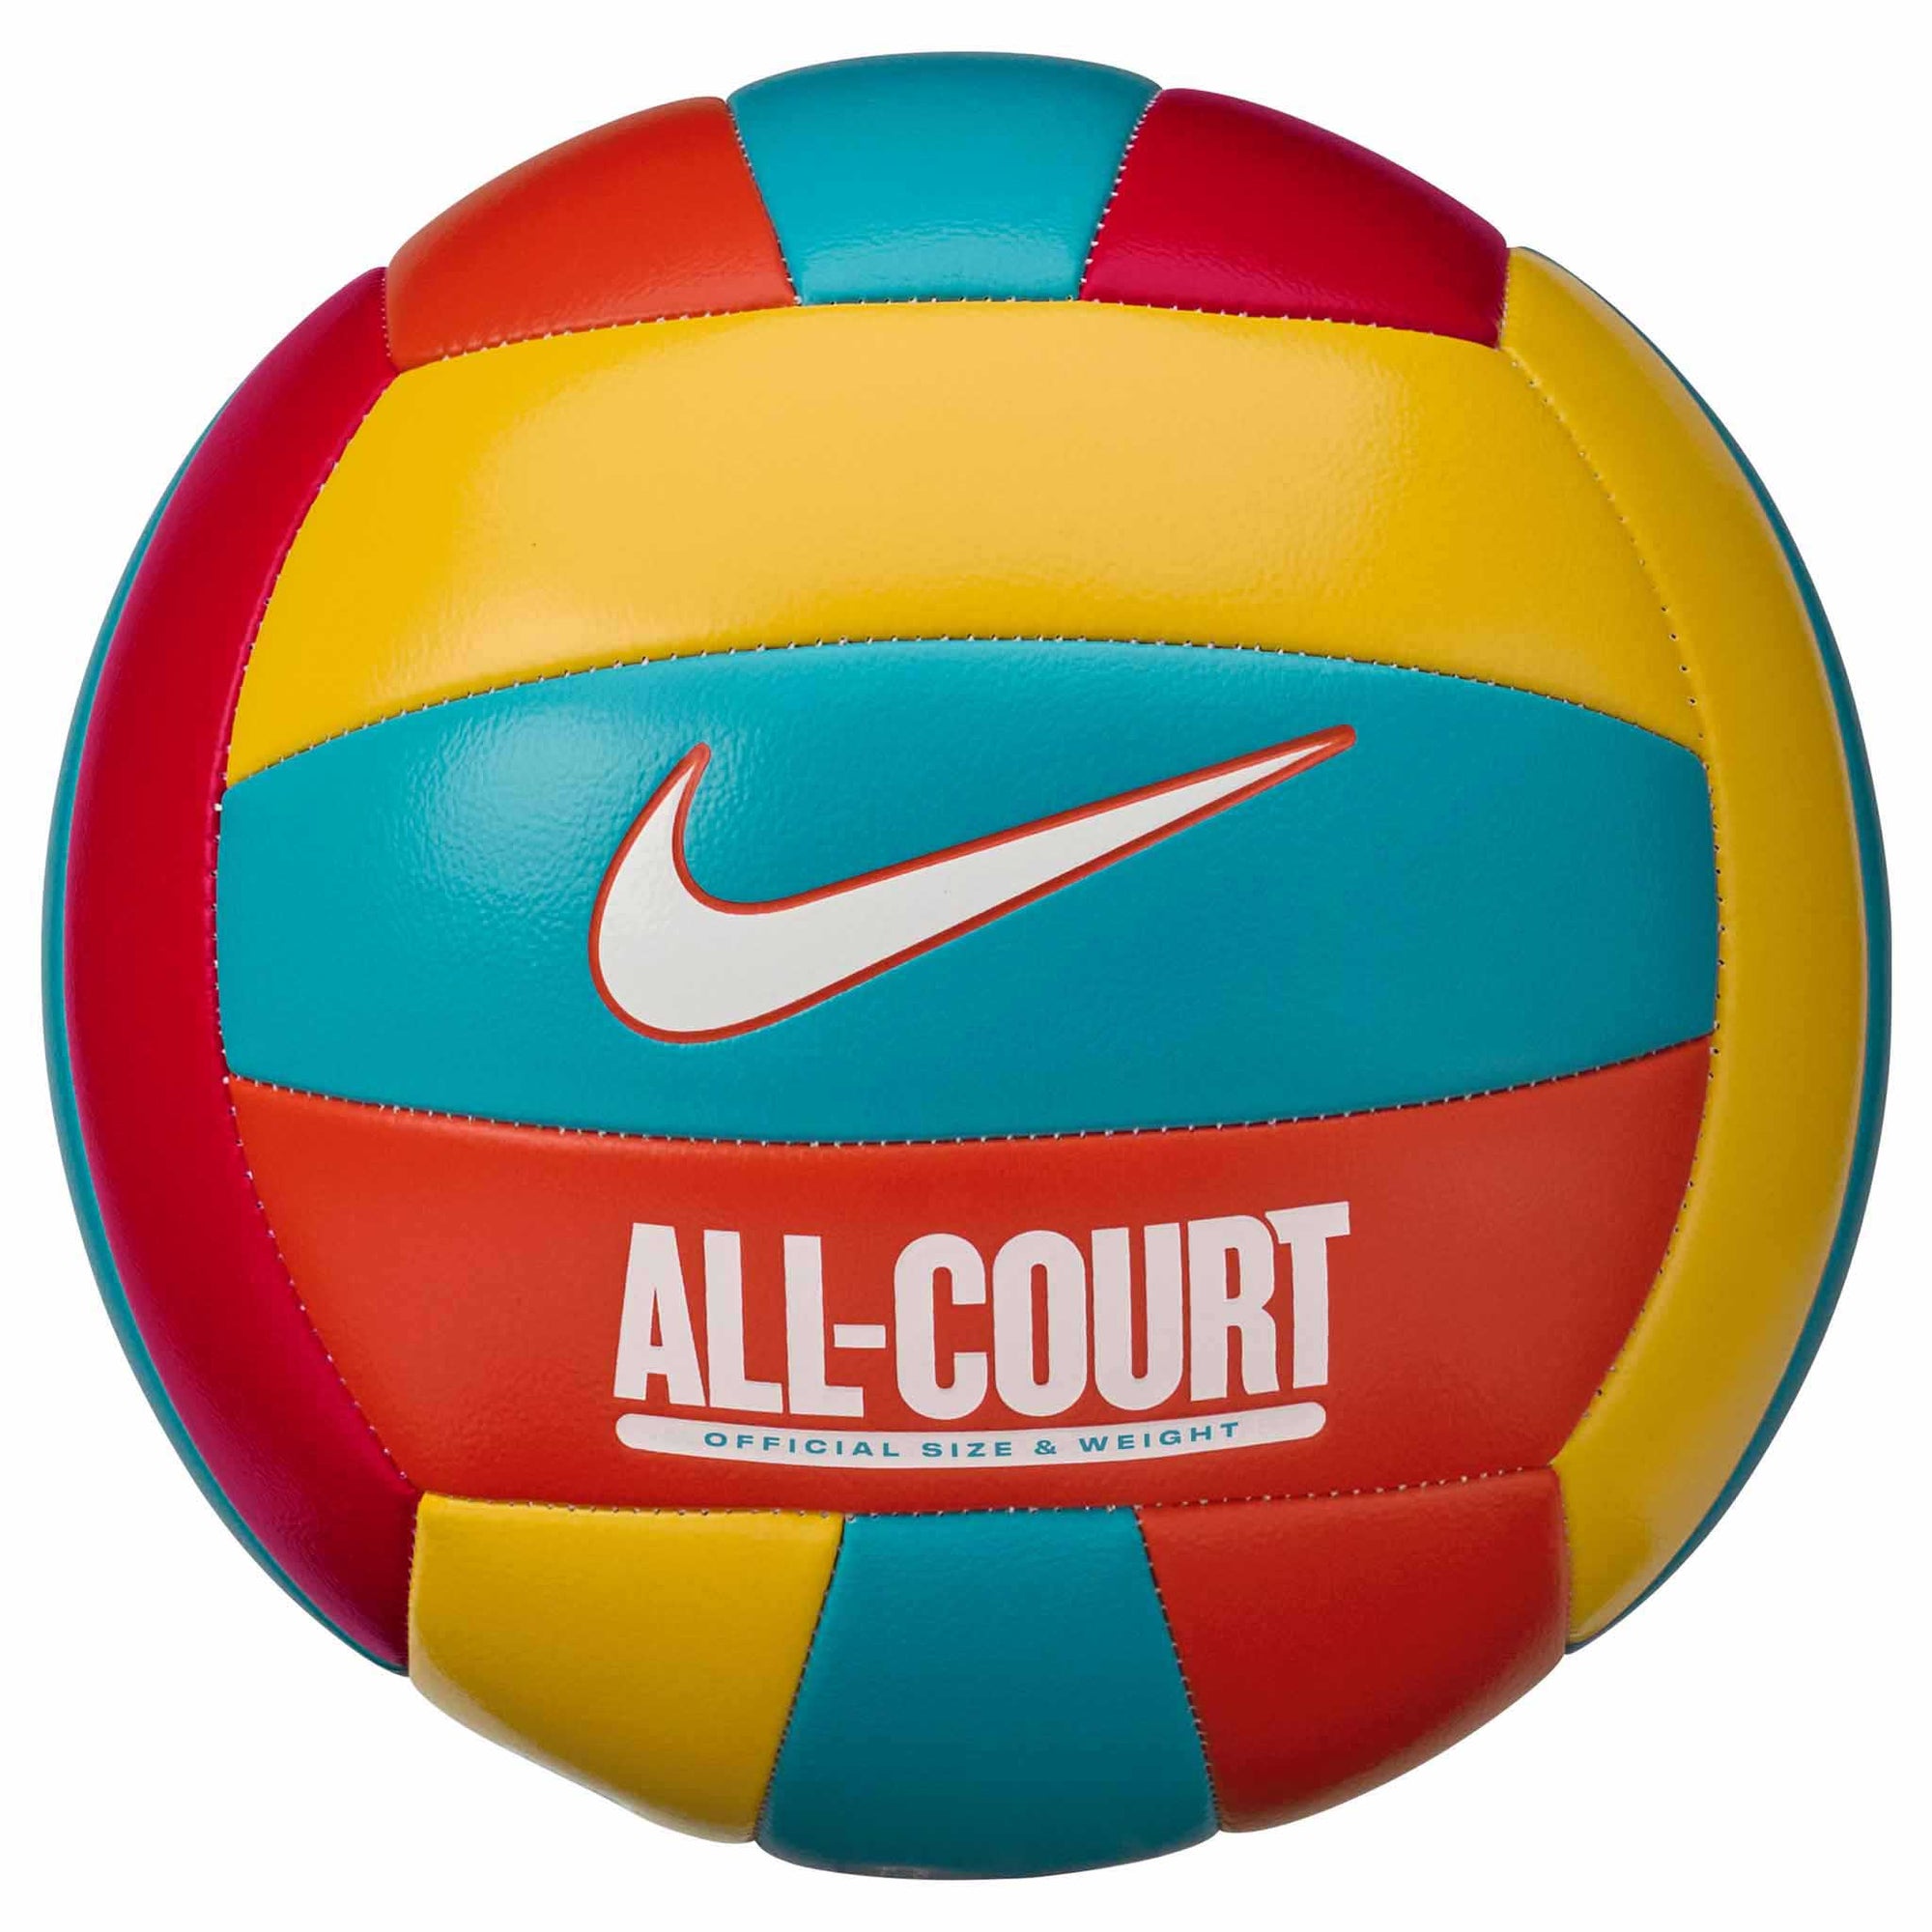 Nike All Court ballon de volleyball - University Red / Teal Nebula / University Gold / White